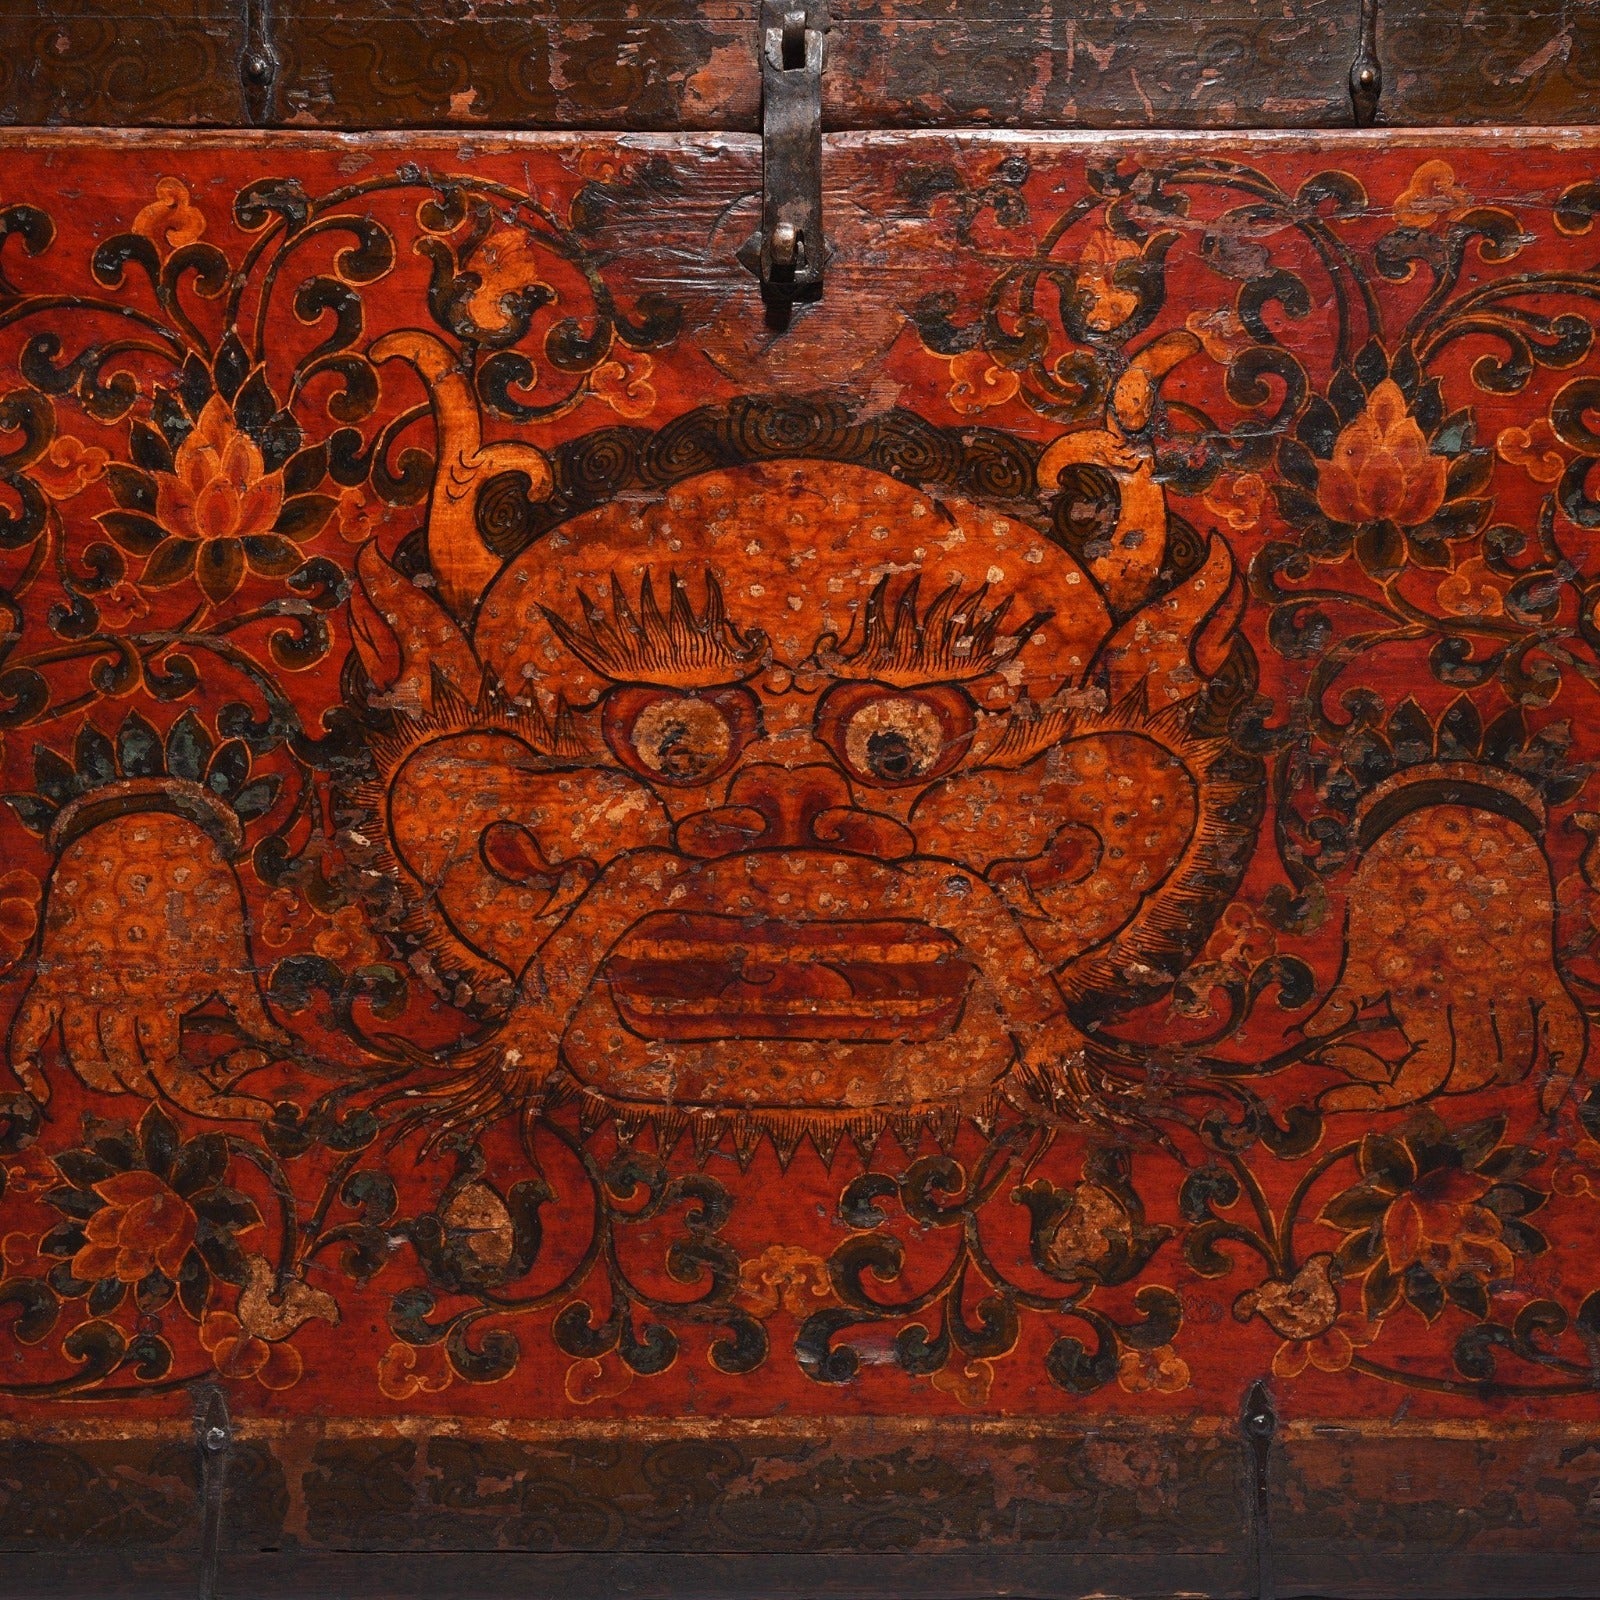 Painted Zeeba Chest From Tibet - 19thC | Indigo Antiques